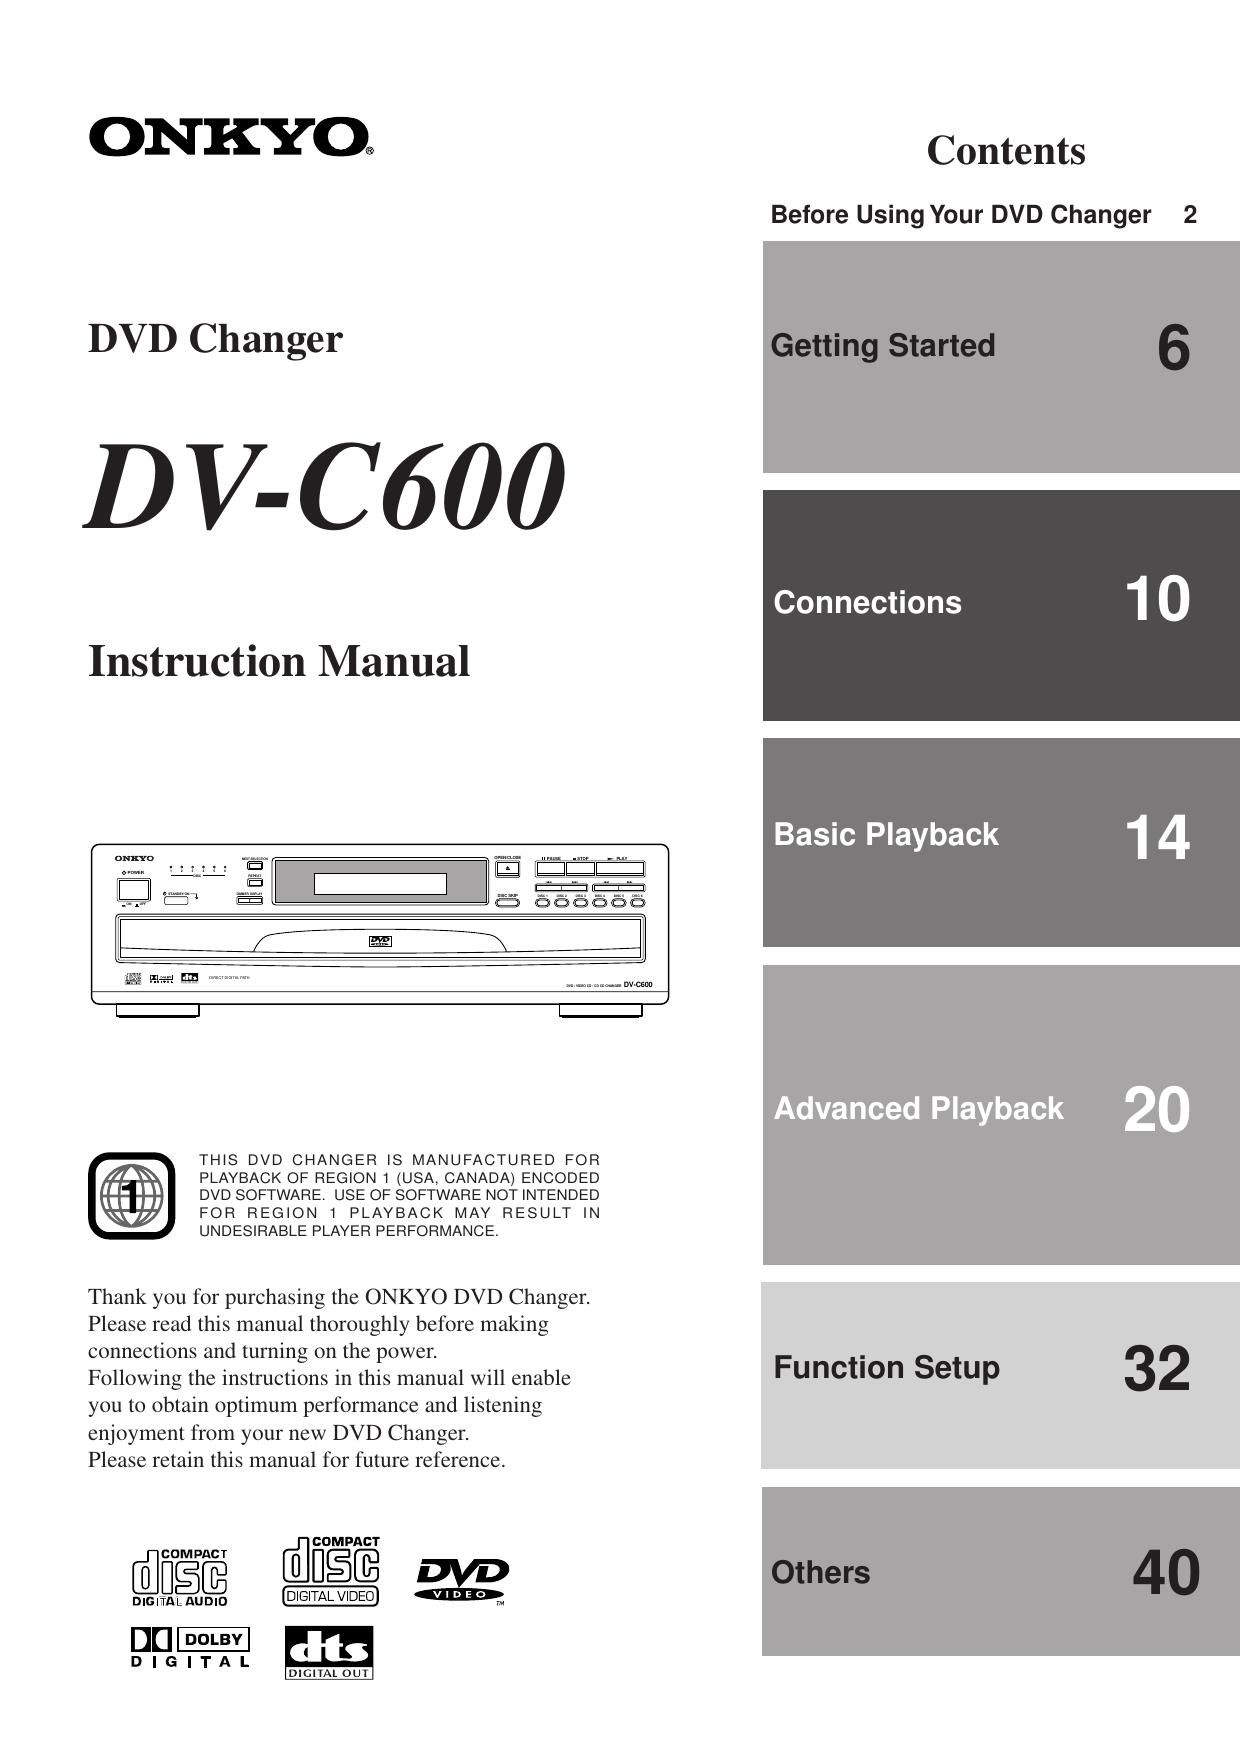 Onkyo DVC 600 Owners Manual